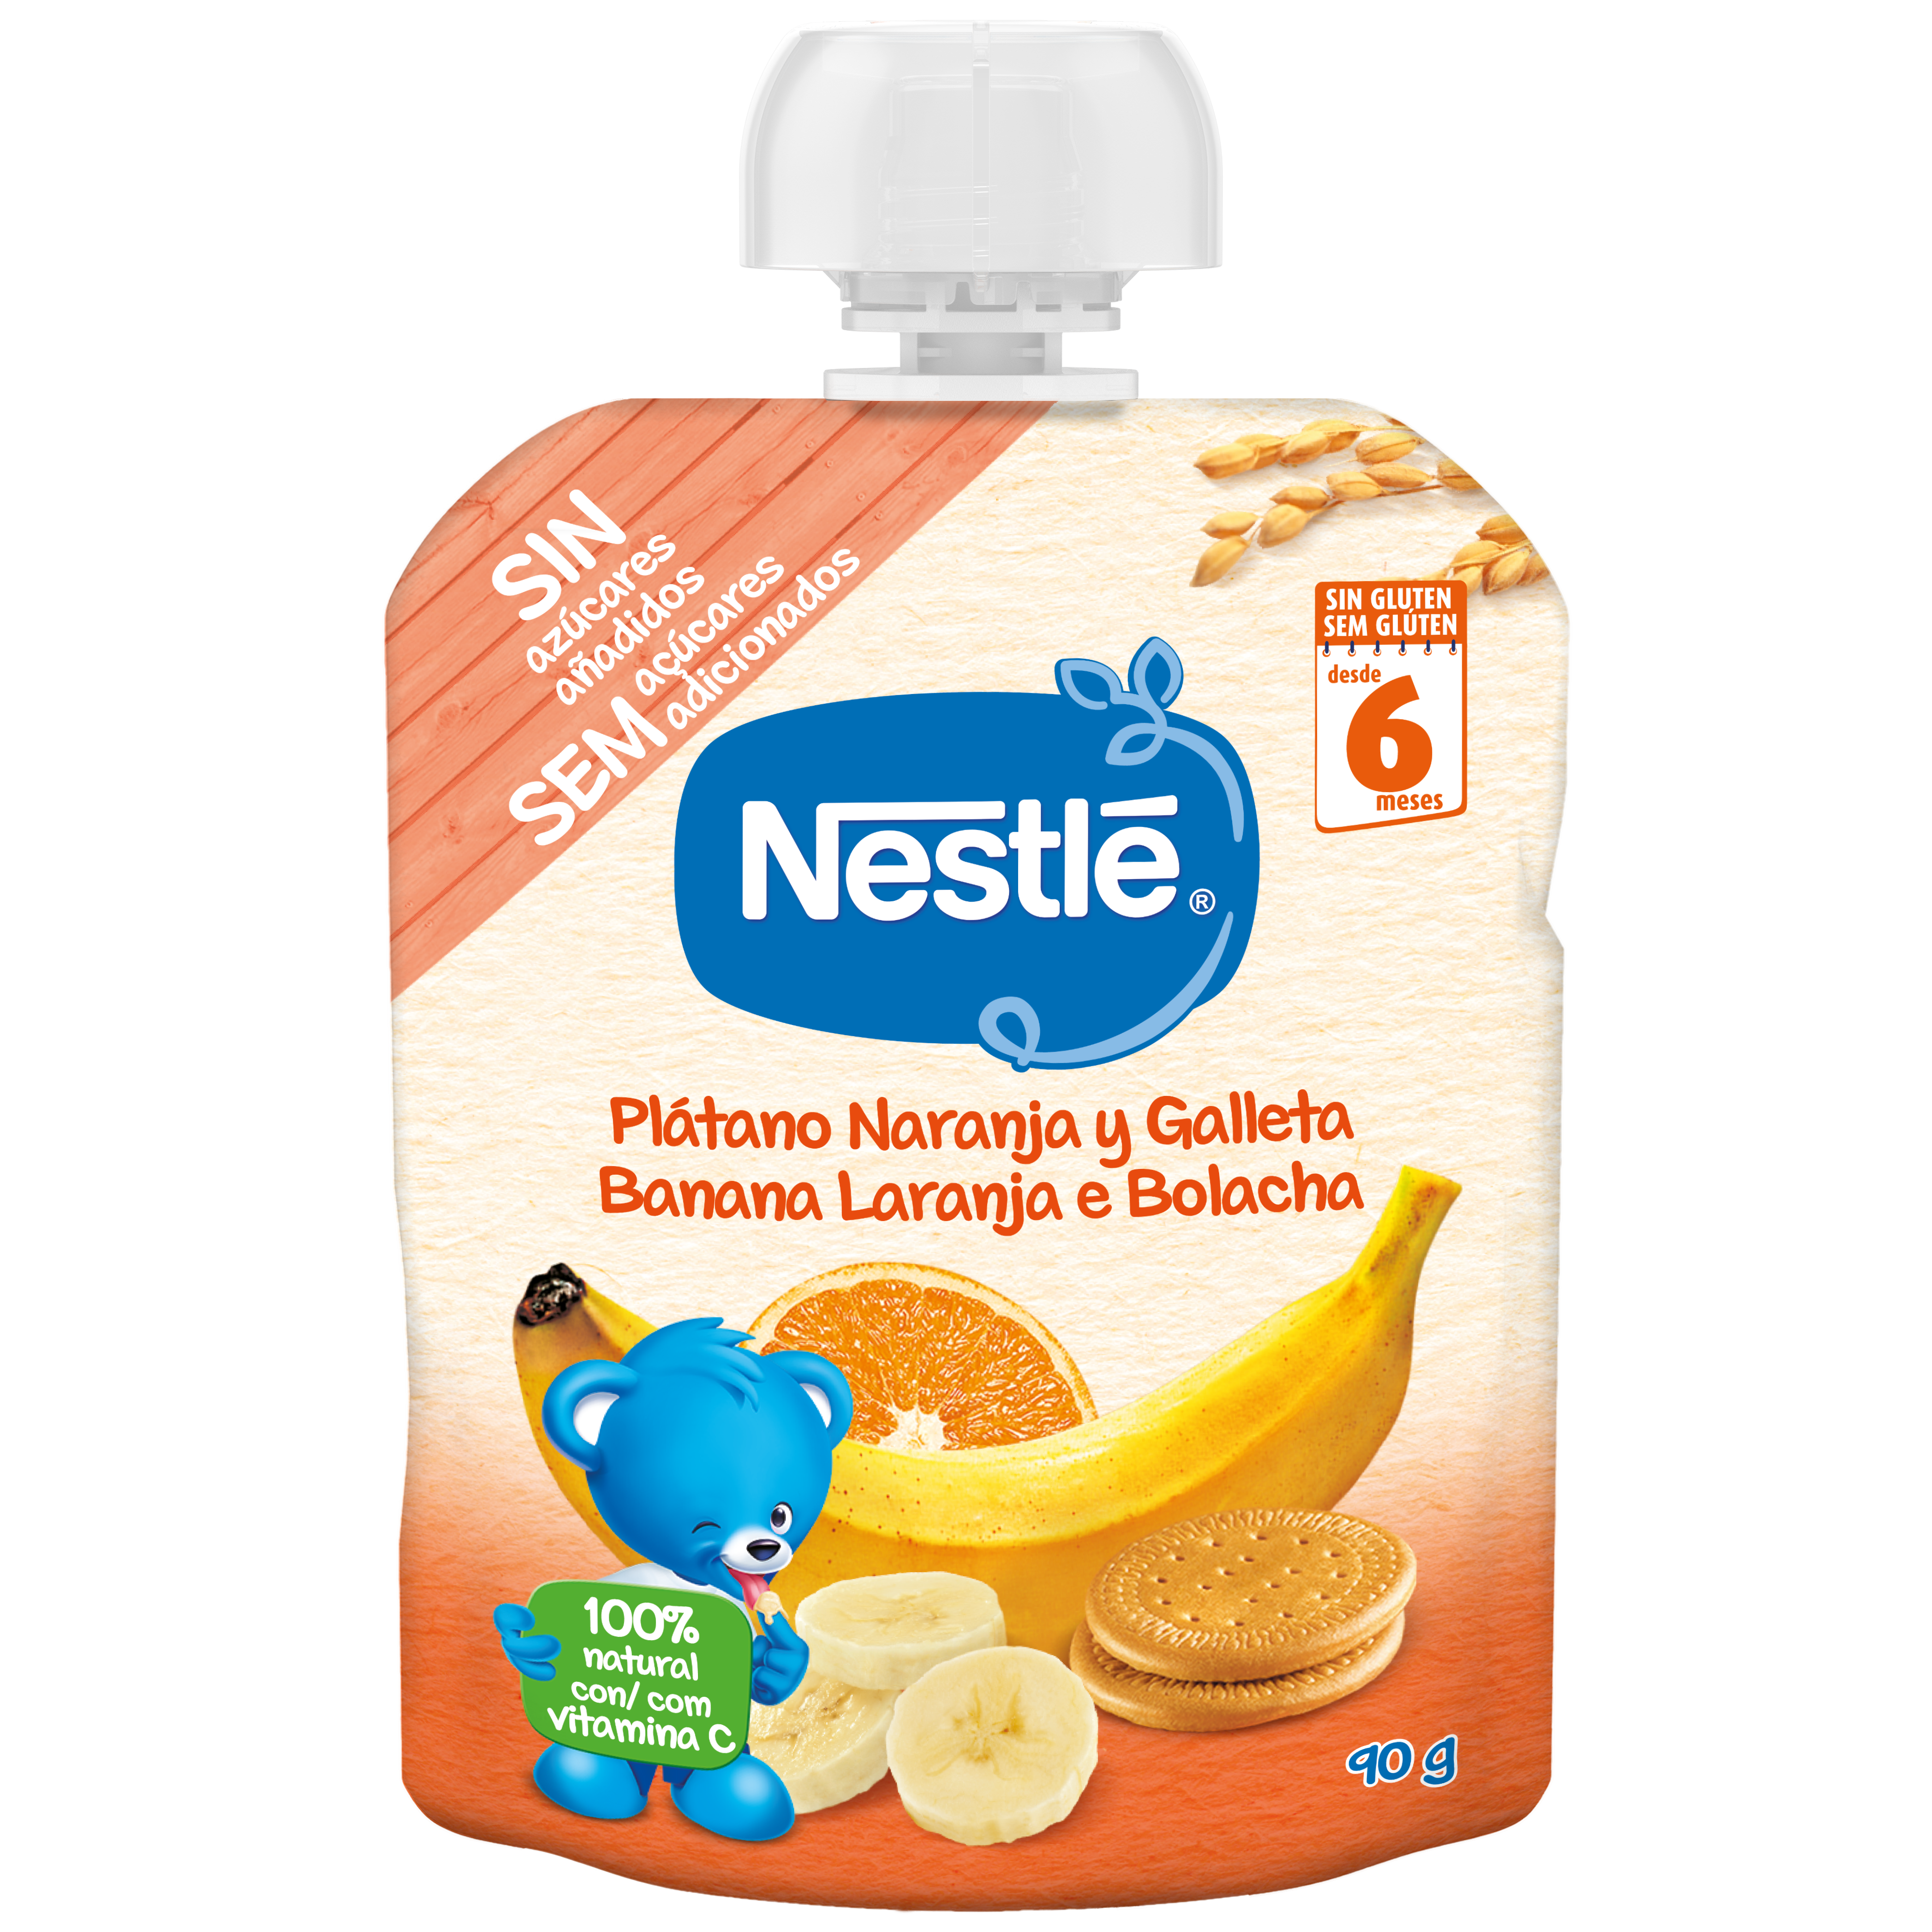 Nestle - Cerelac Banana Laranja